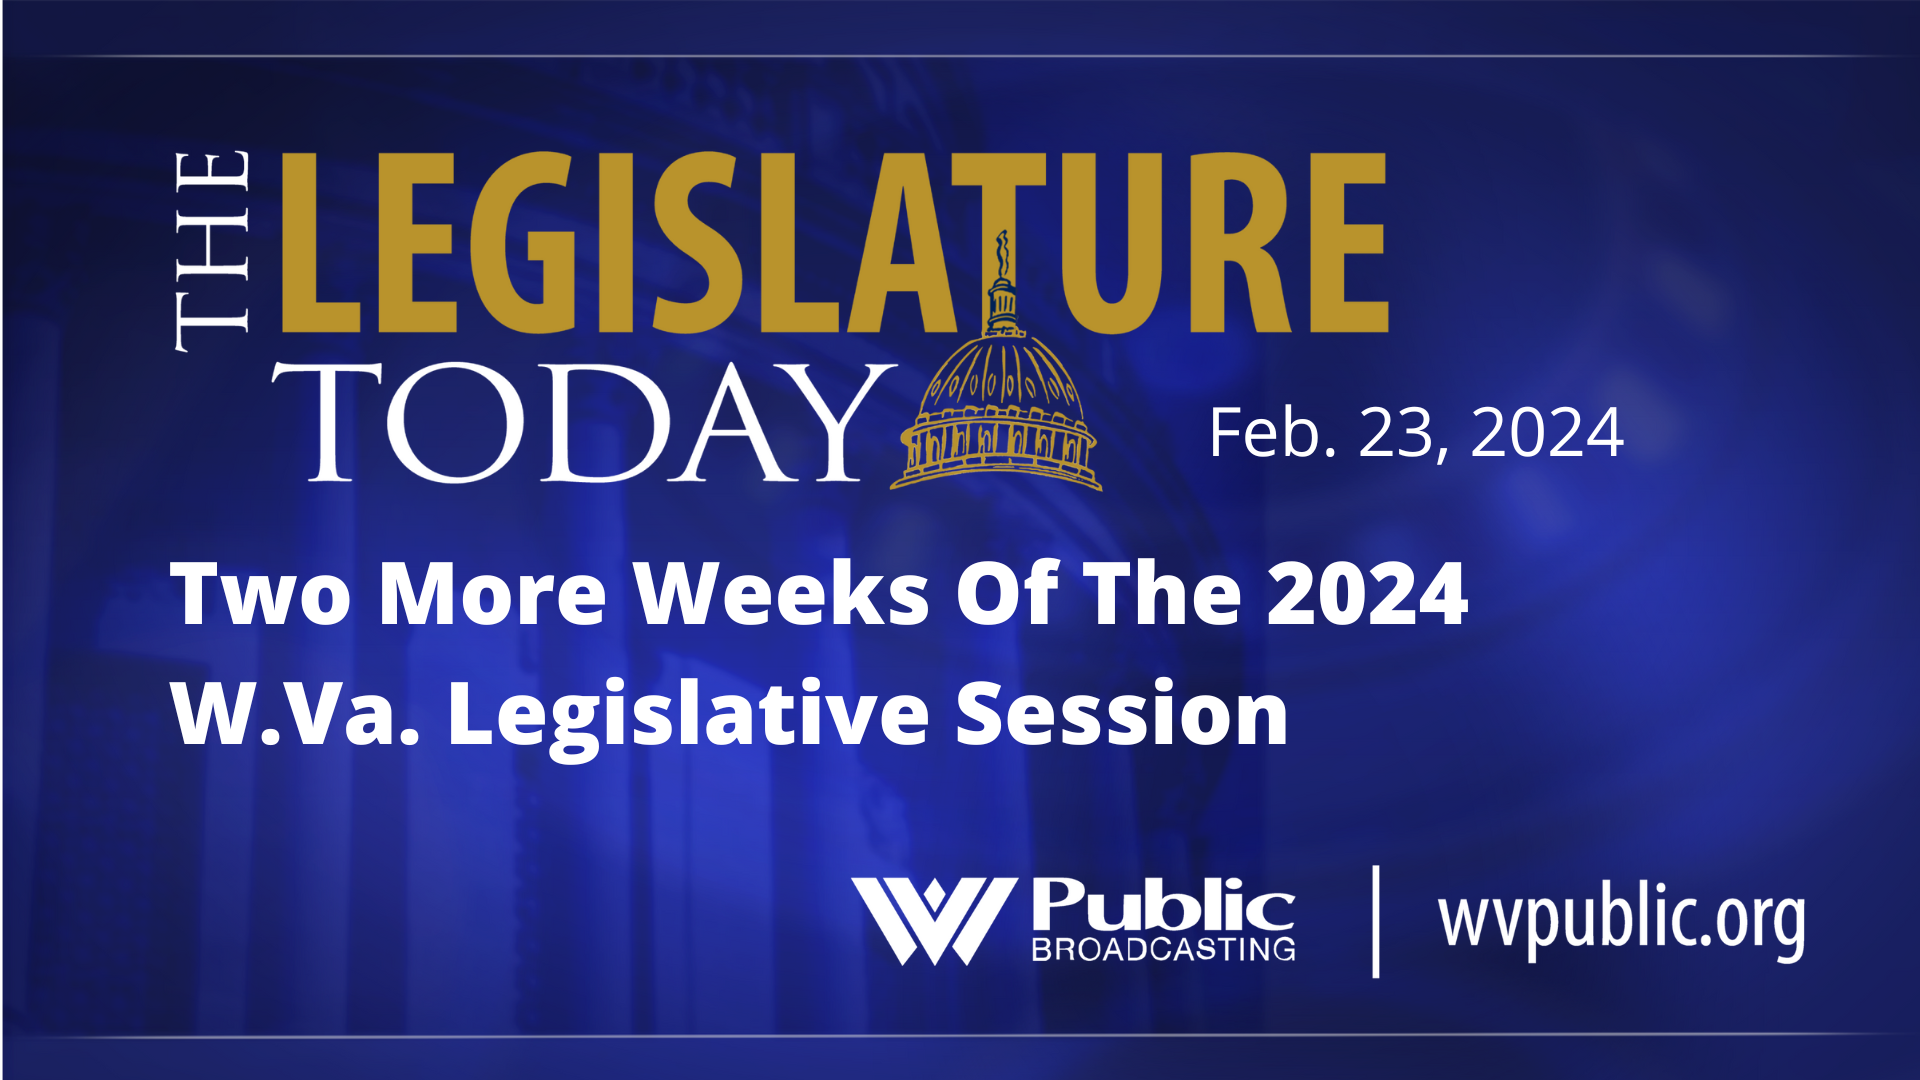 Two More Weeks Of The 2024 W.Va. Legislative Session